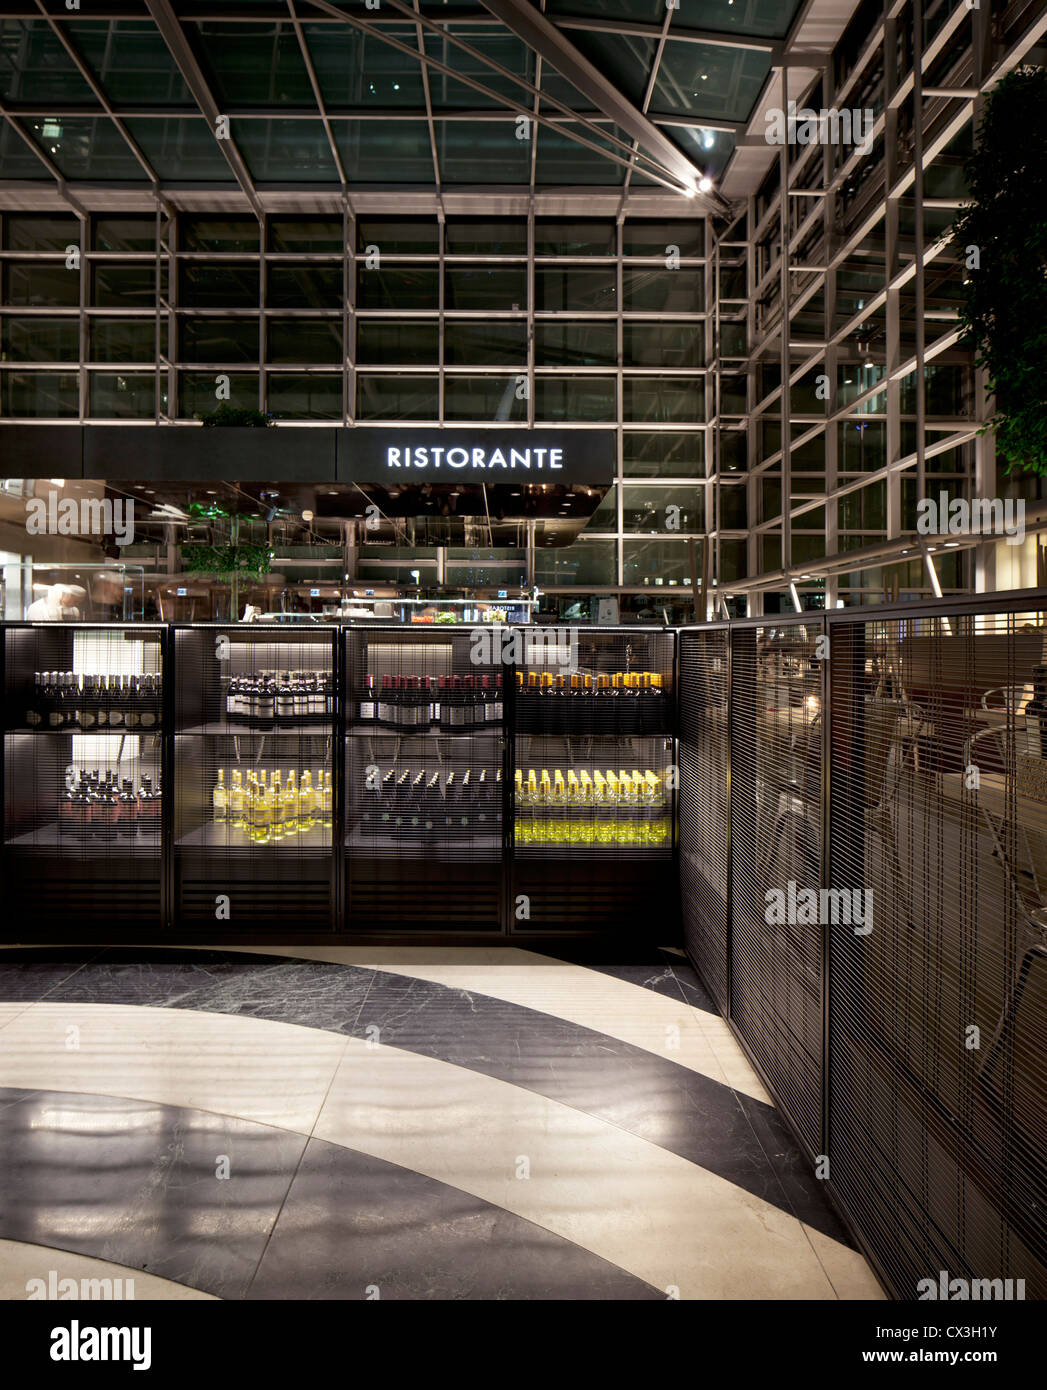 Obika Canary Wharf, London, United Kingdom. Architect: Labics, 2012. Drinks storage and ristorante signage. Stock Photo